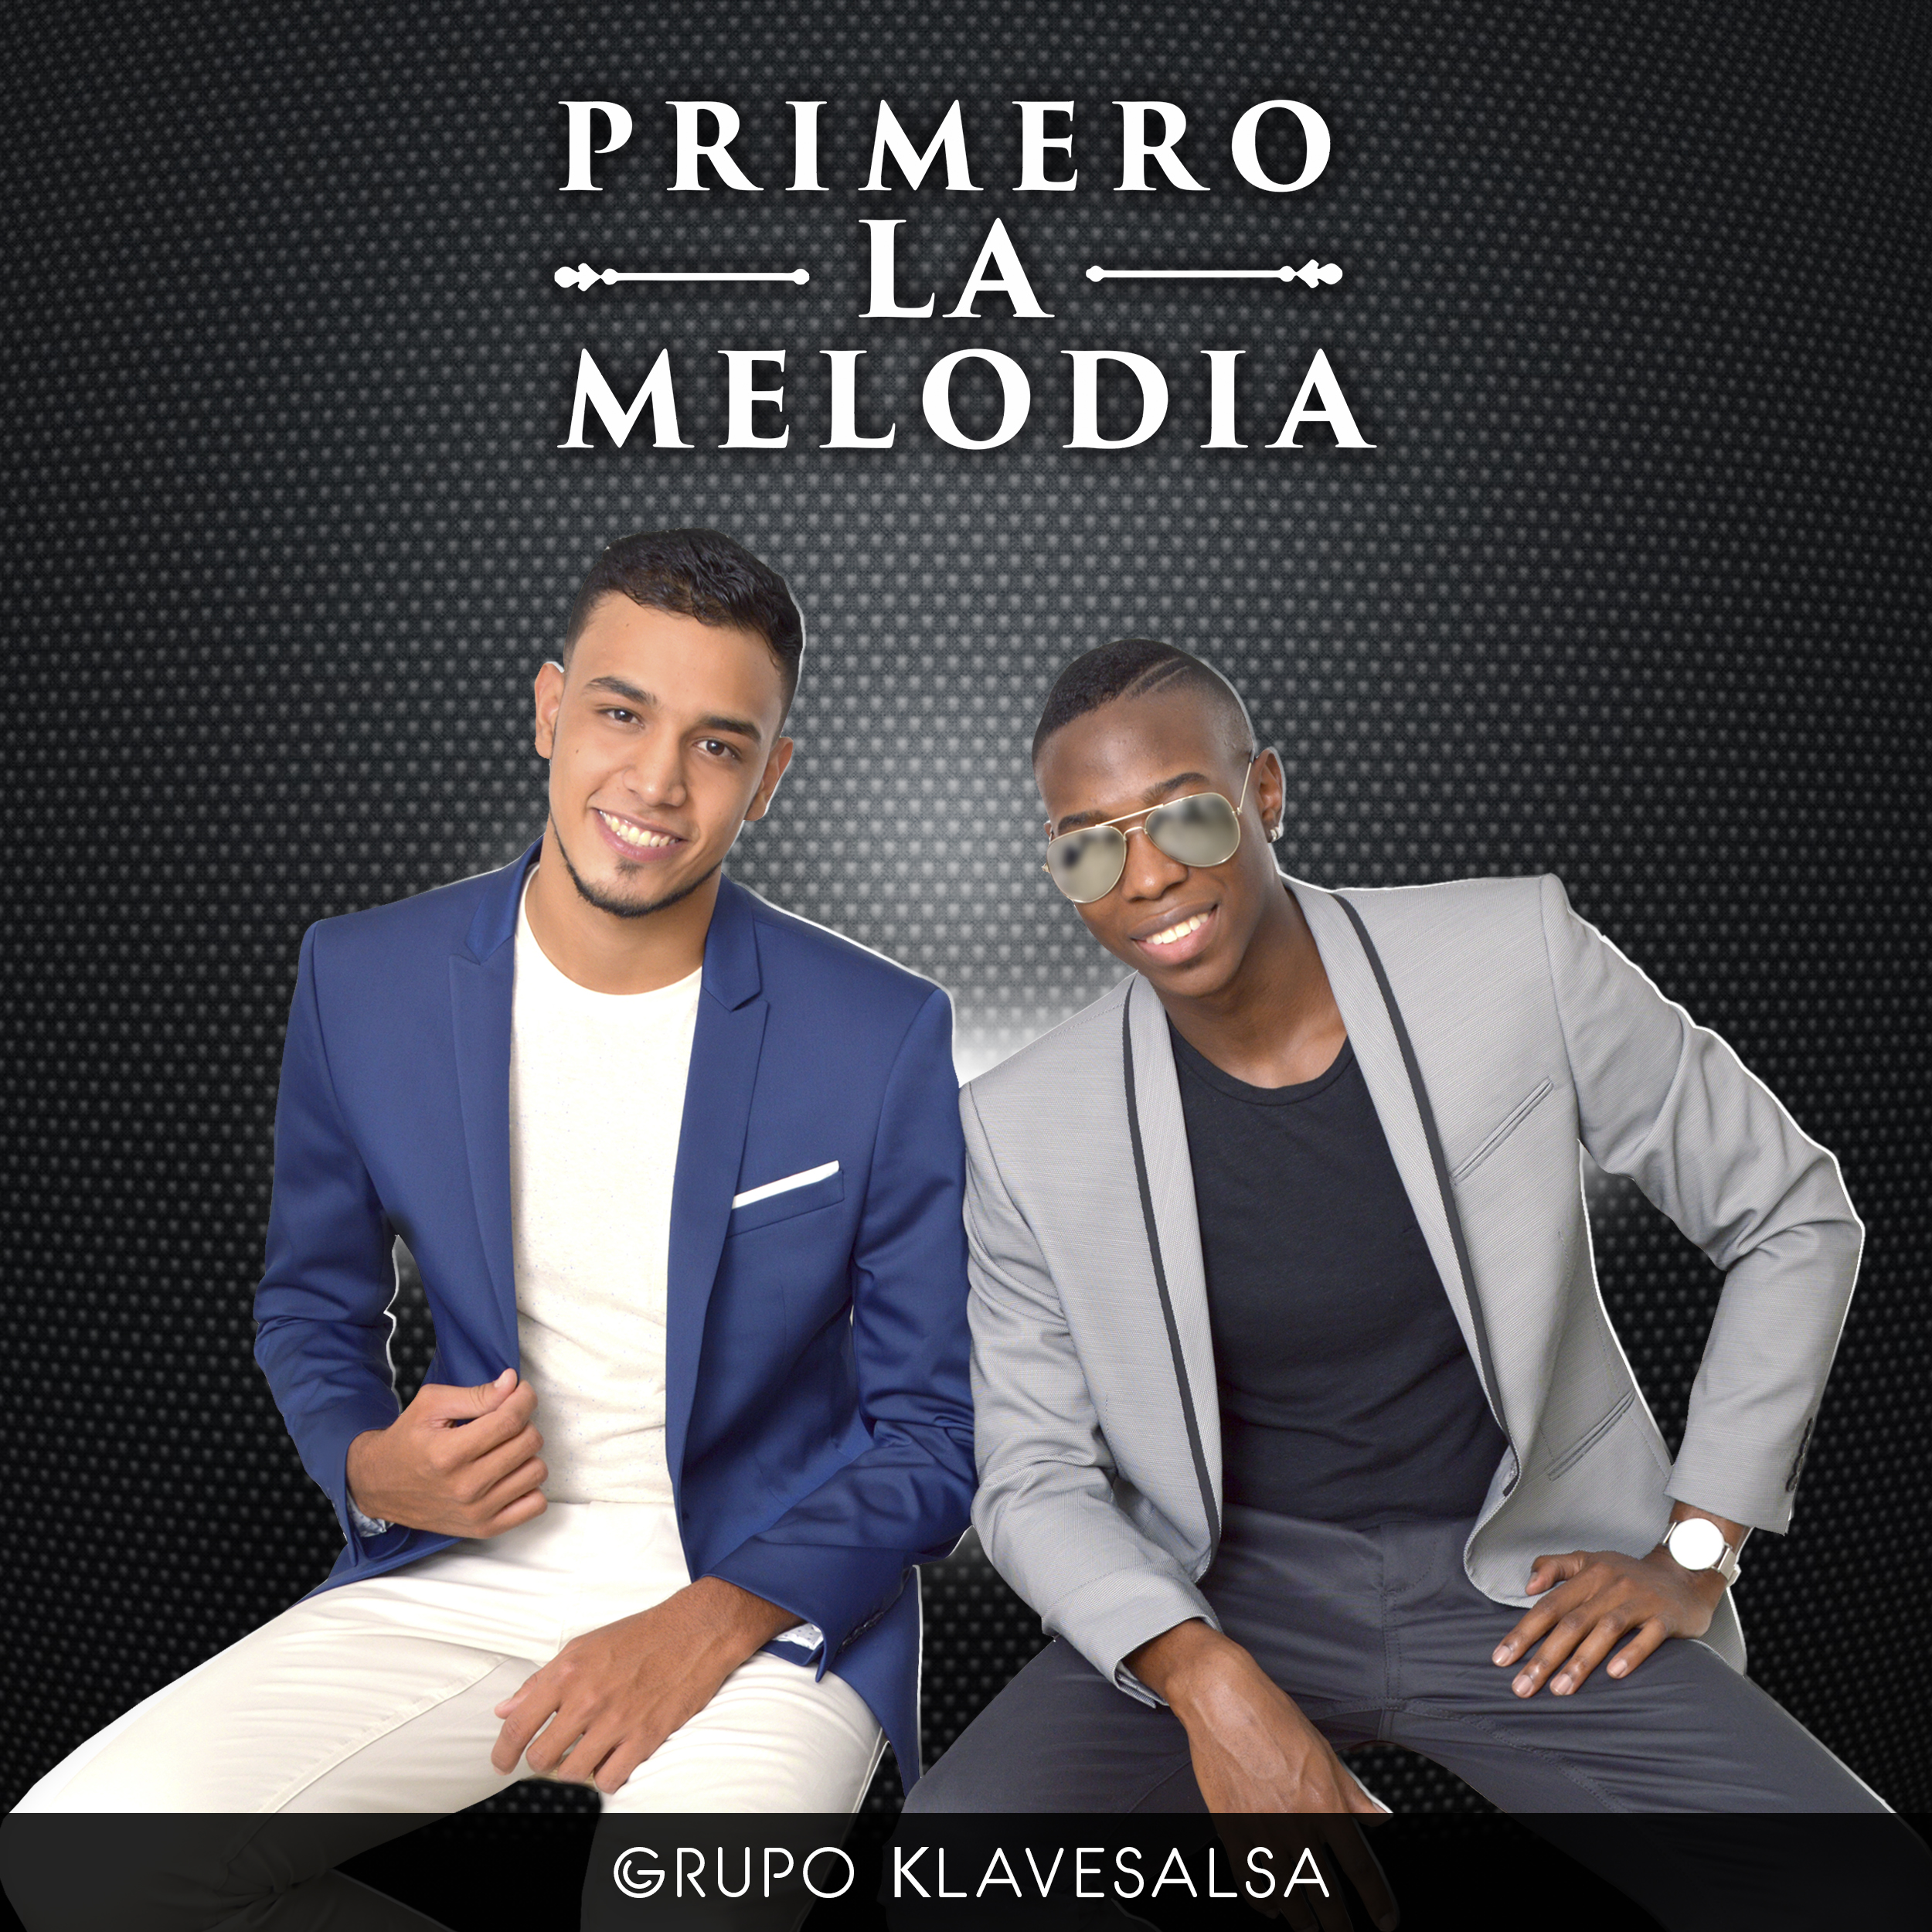 Primero La Melodia, Grupo Klavesalsa